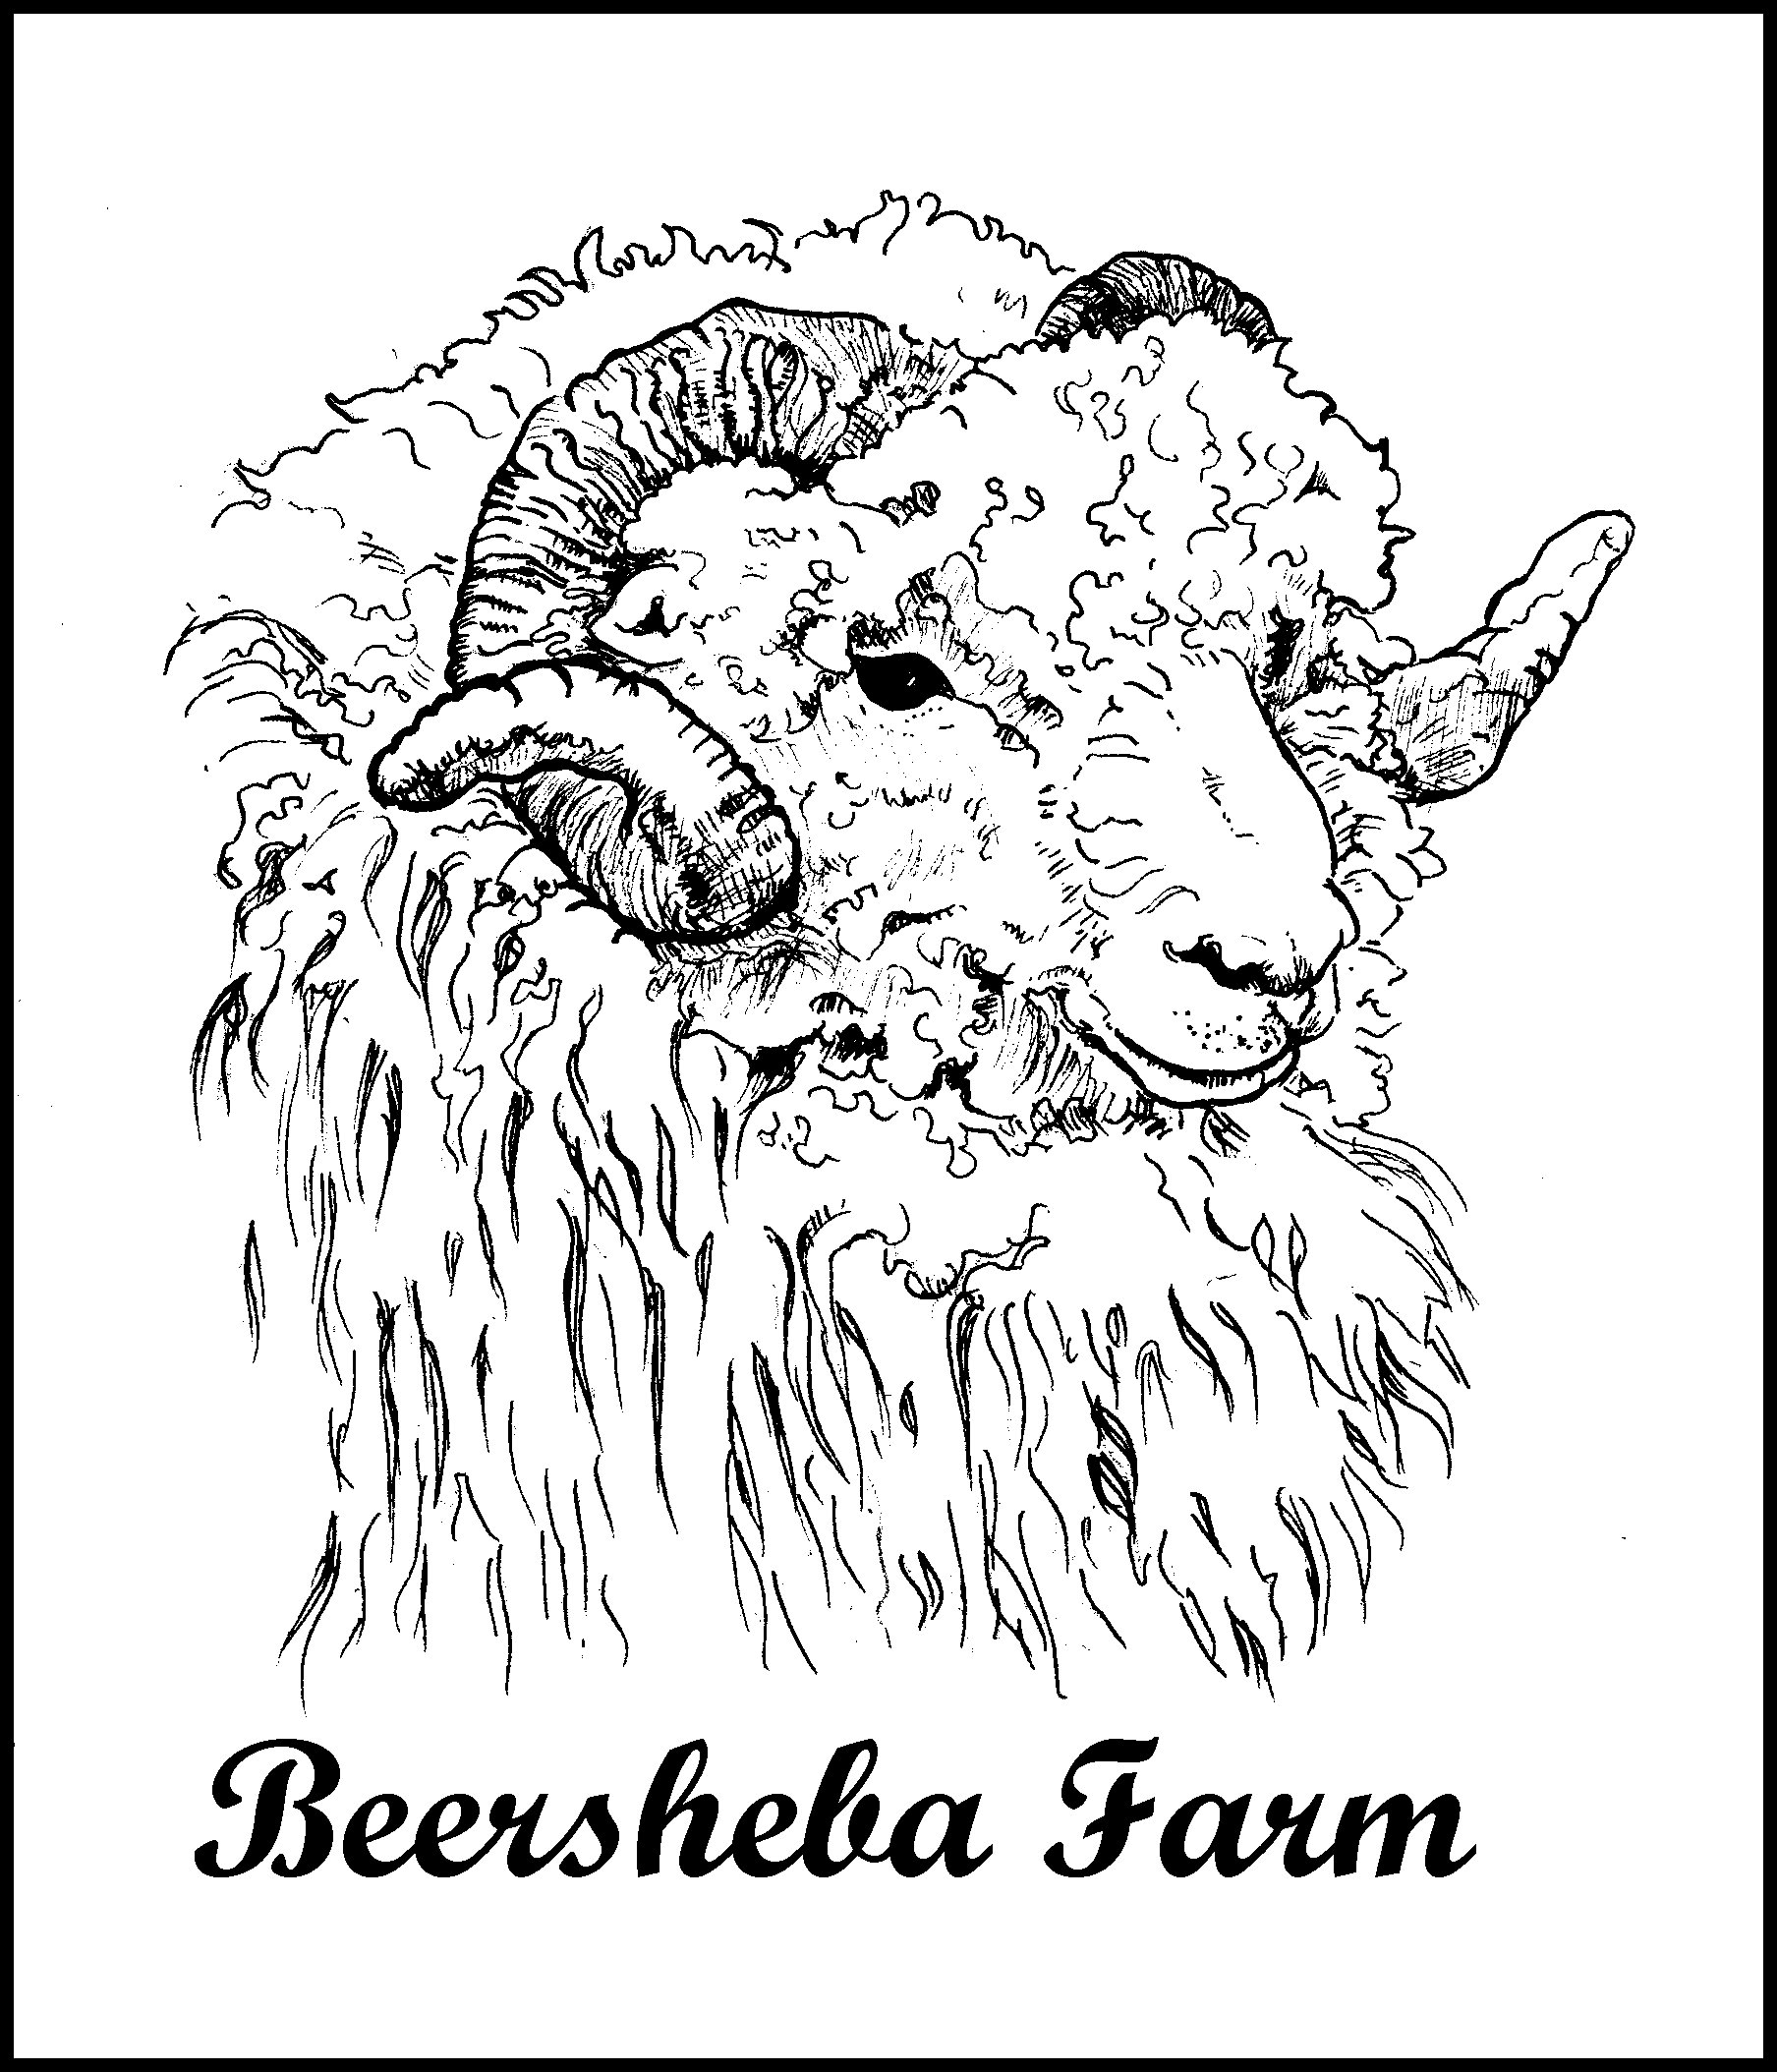 Beersheba Farm